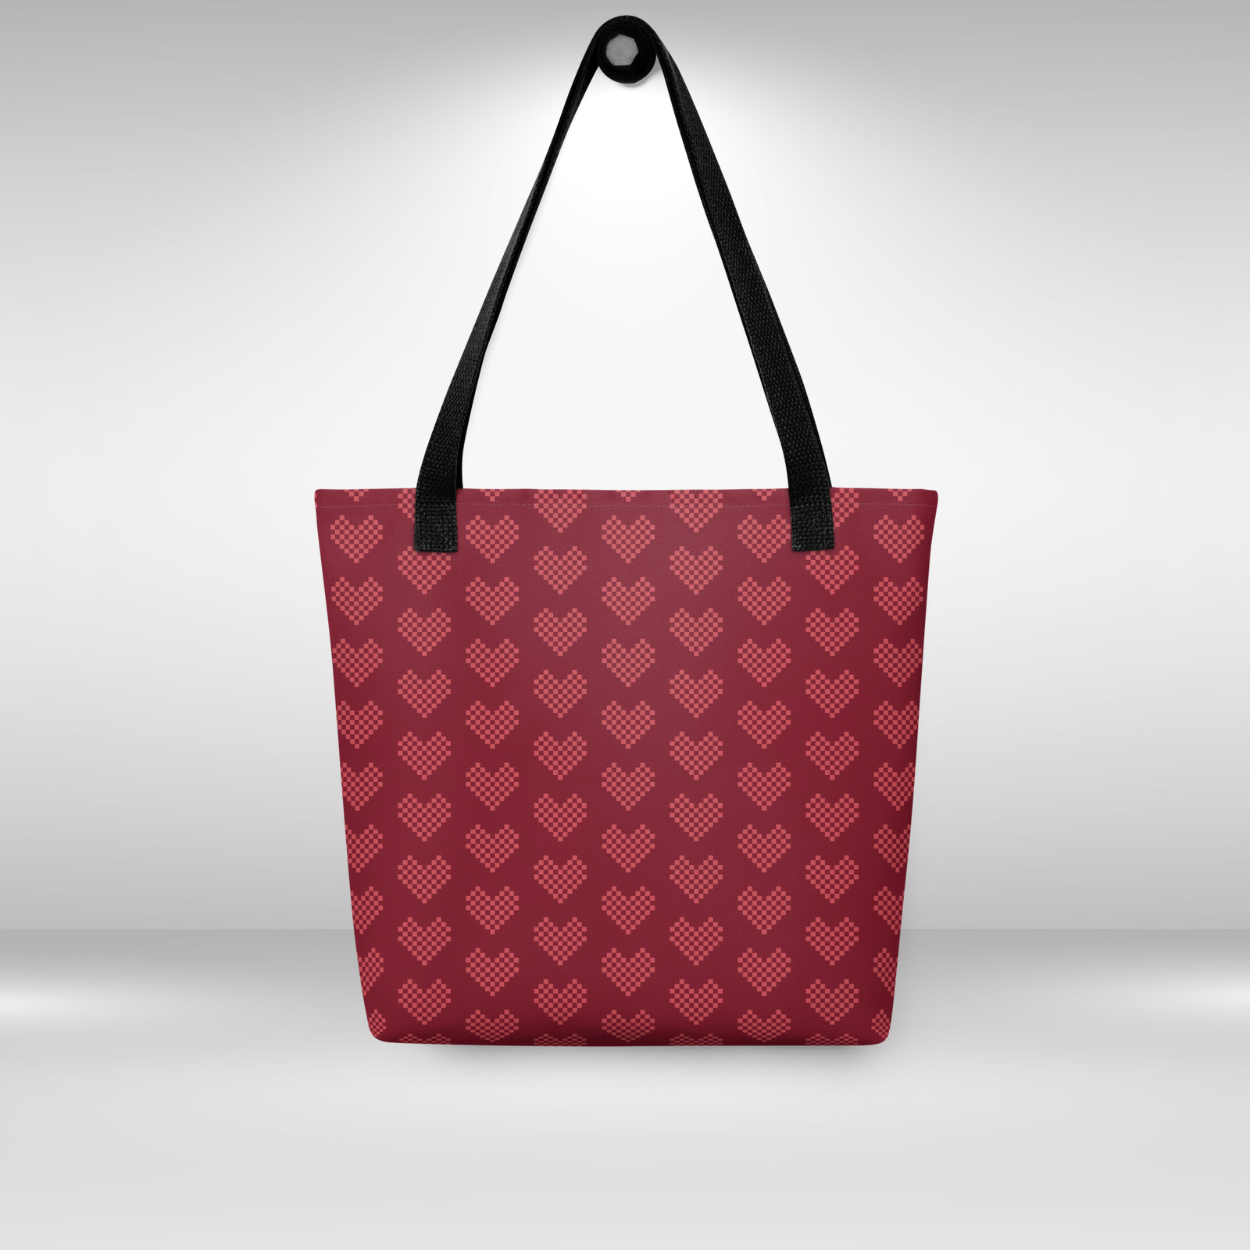 Shopping Tote Bag - Red Hearts Print